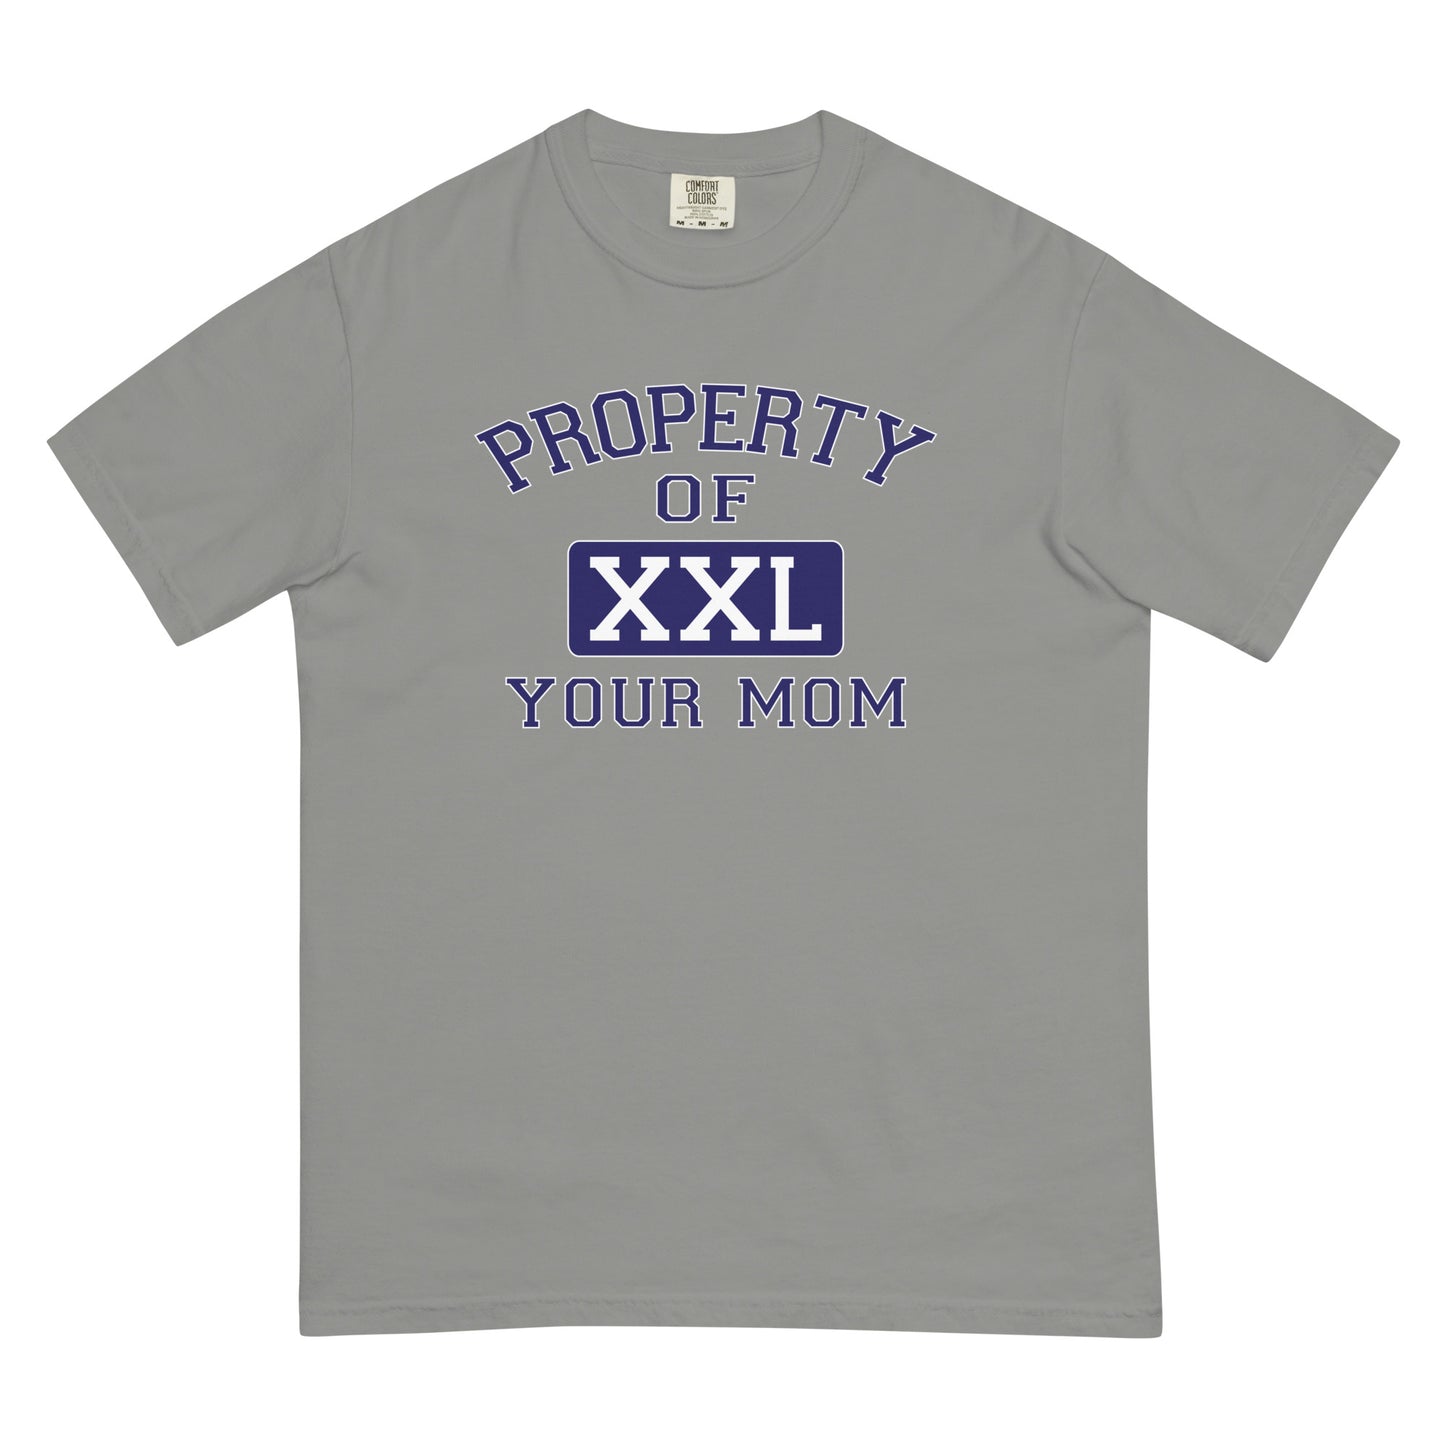 XXL Your Mom's Tee